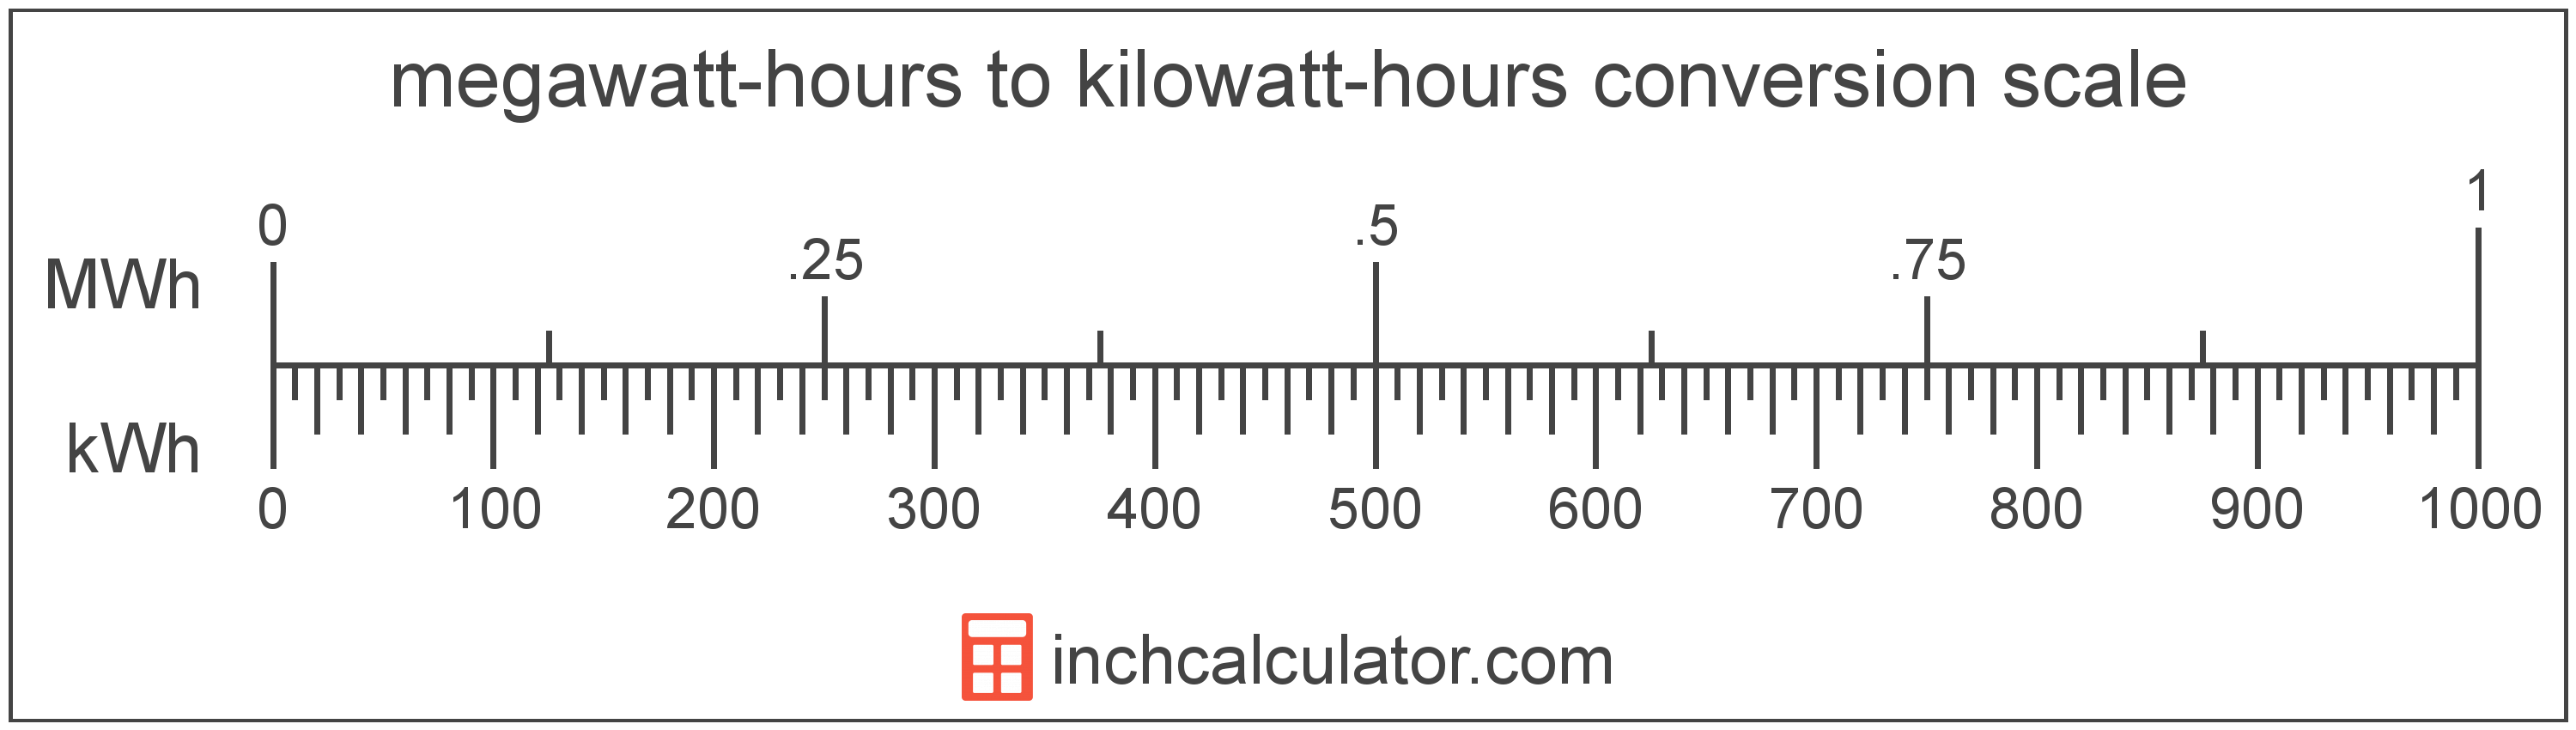 Sex discrimination Cardinal Precursor Megawatt-hours to Kilowatt-hours Conversion (MWh to kWh)